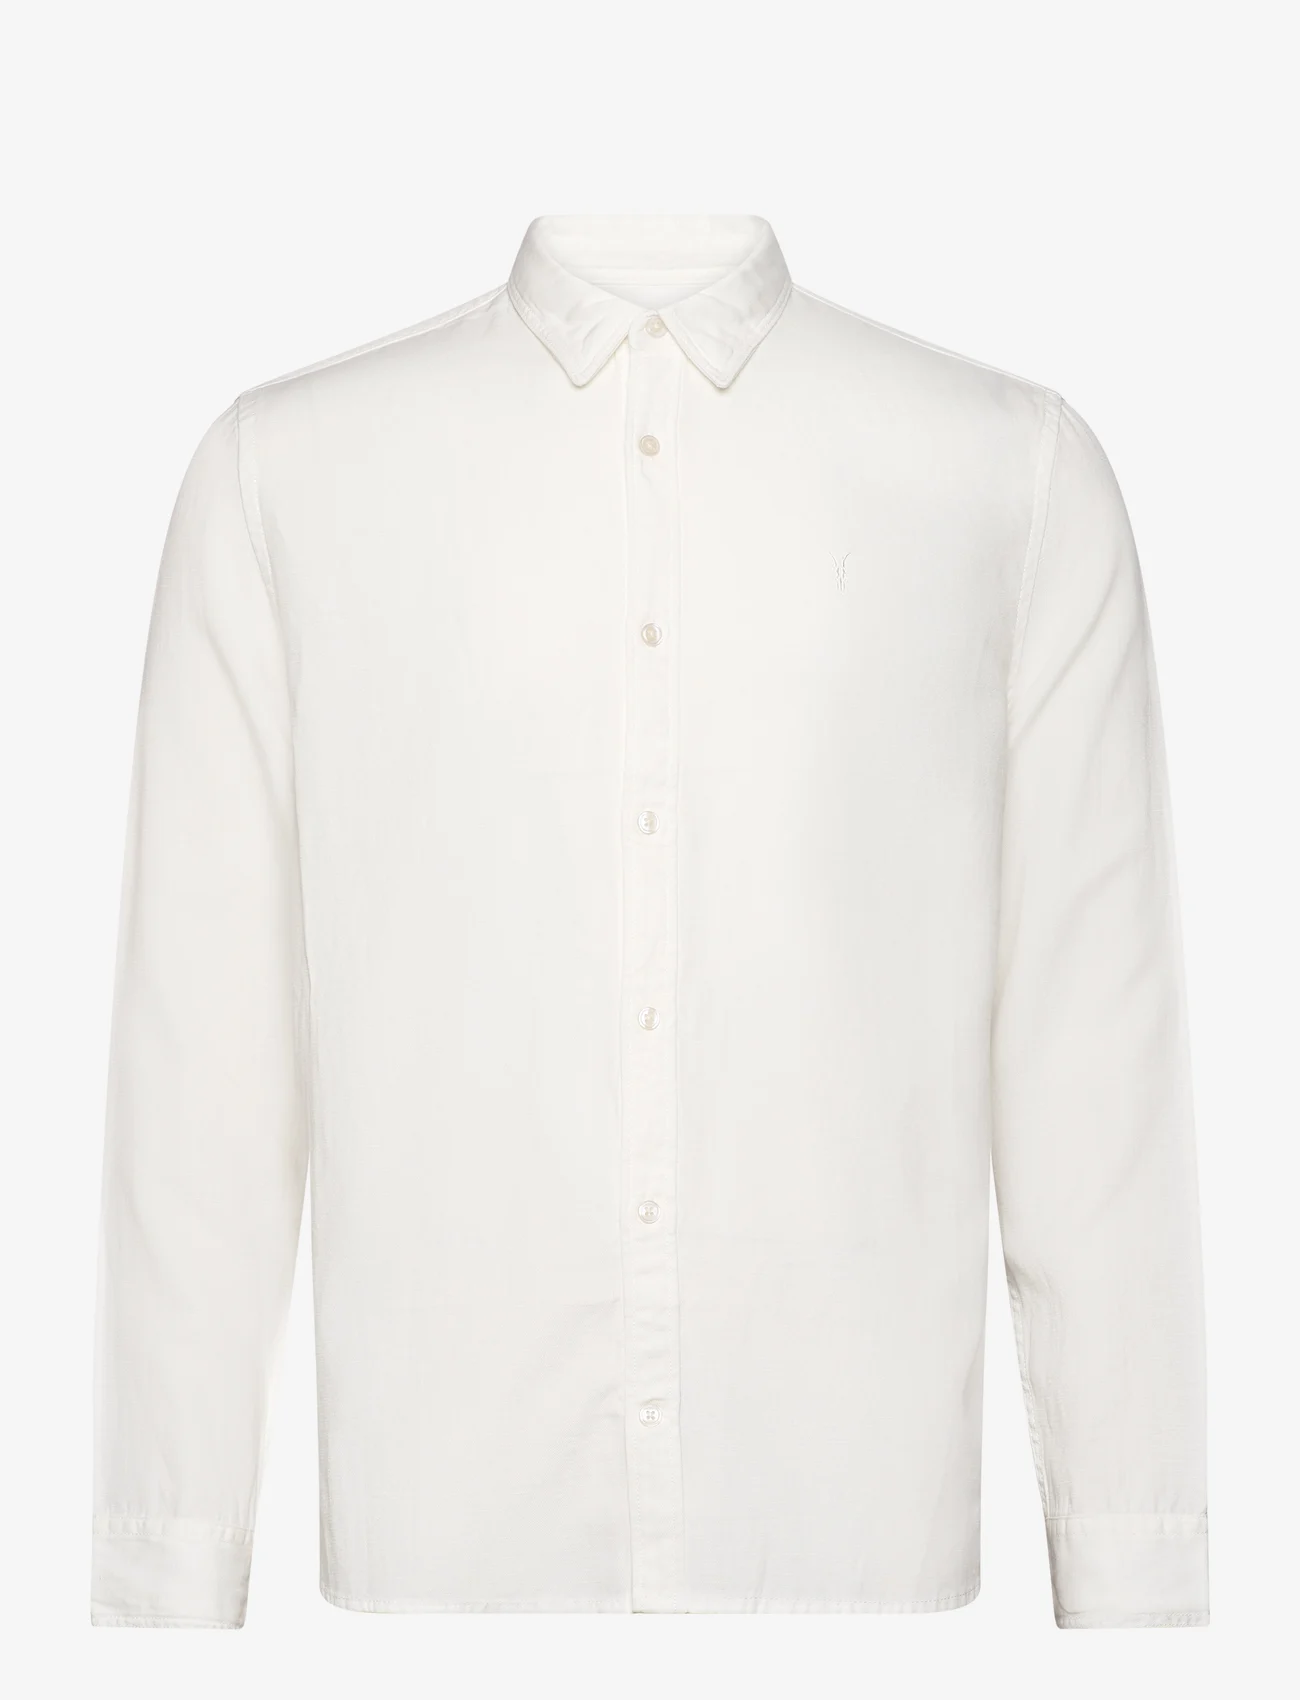 AllSaints - LAGUNA LS SHIRT - koszule casual - optic white - 0